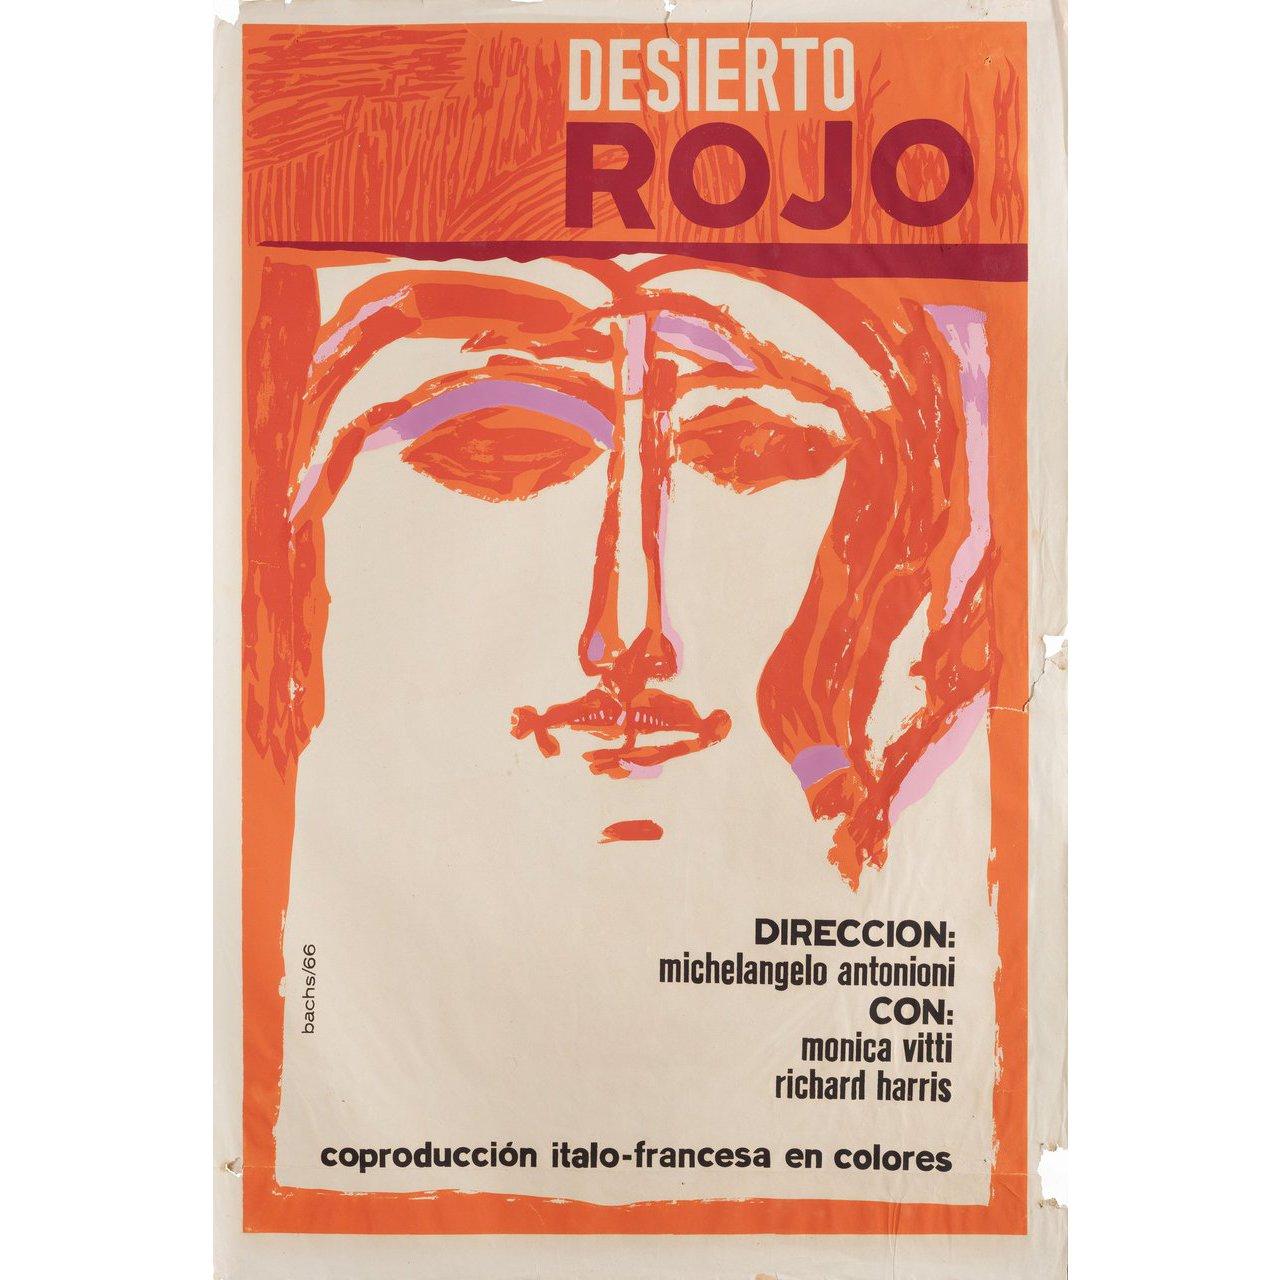 Paper Red Desert 1966 Cuban Film Poster For Sale